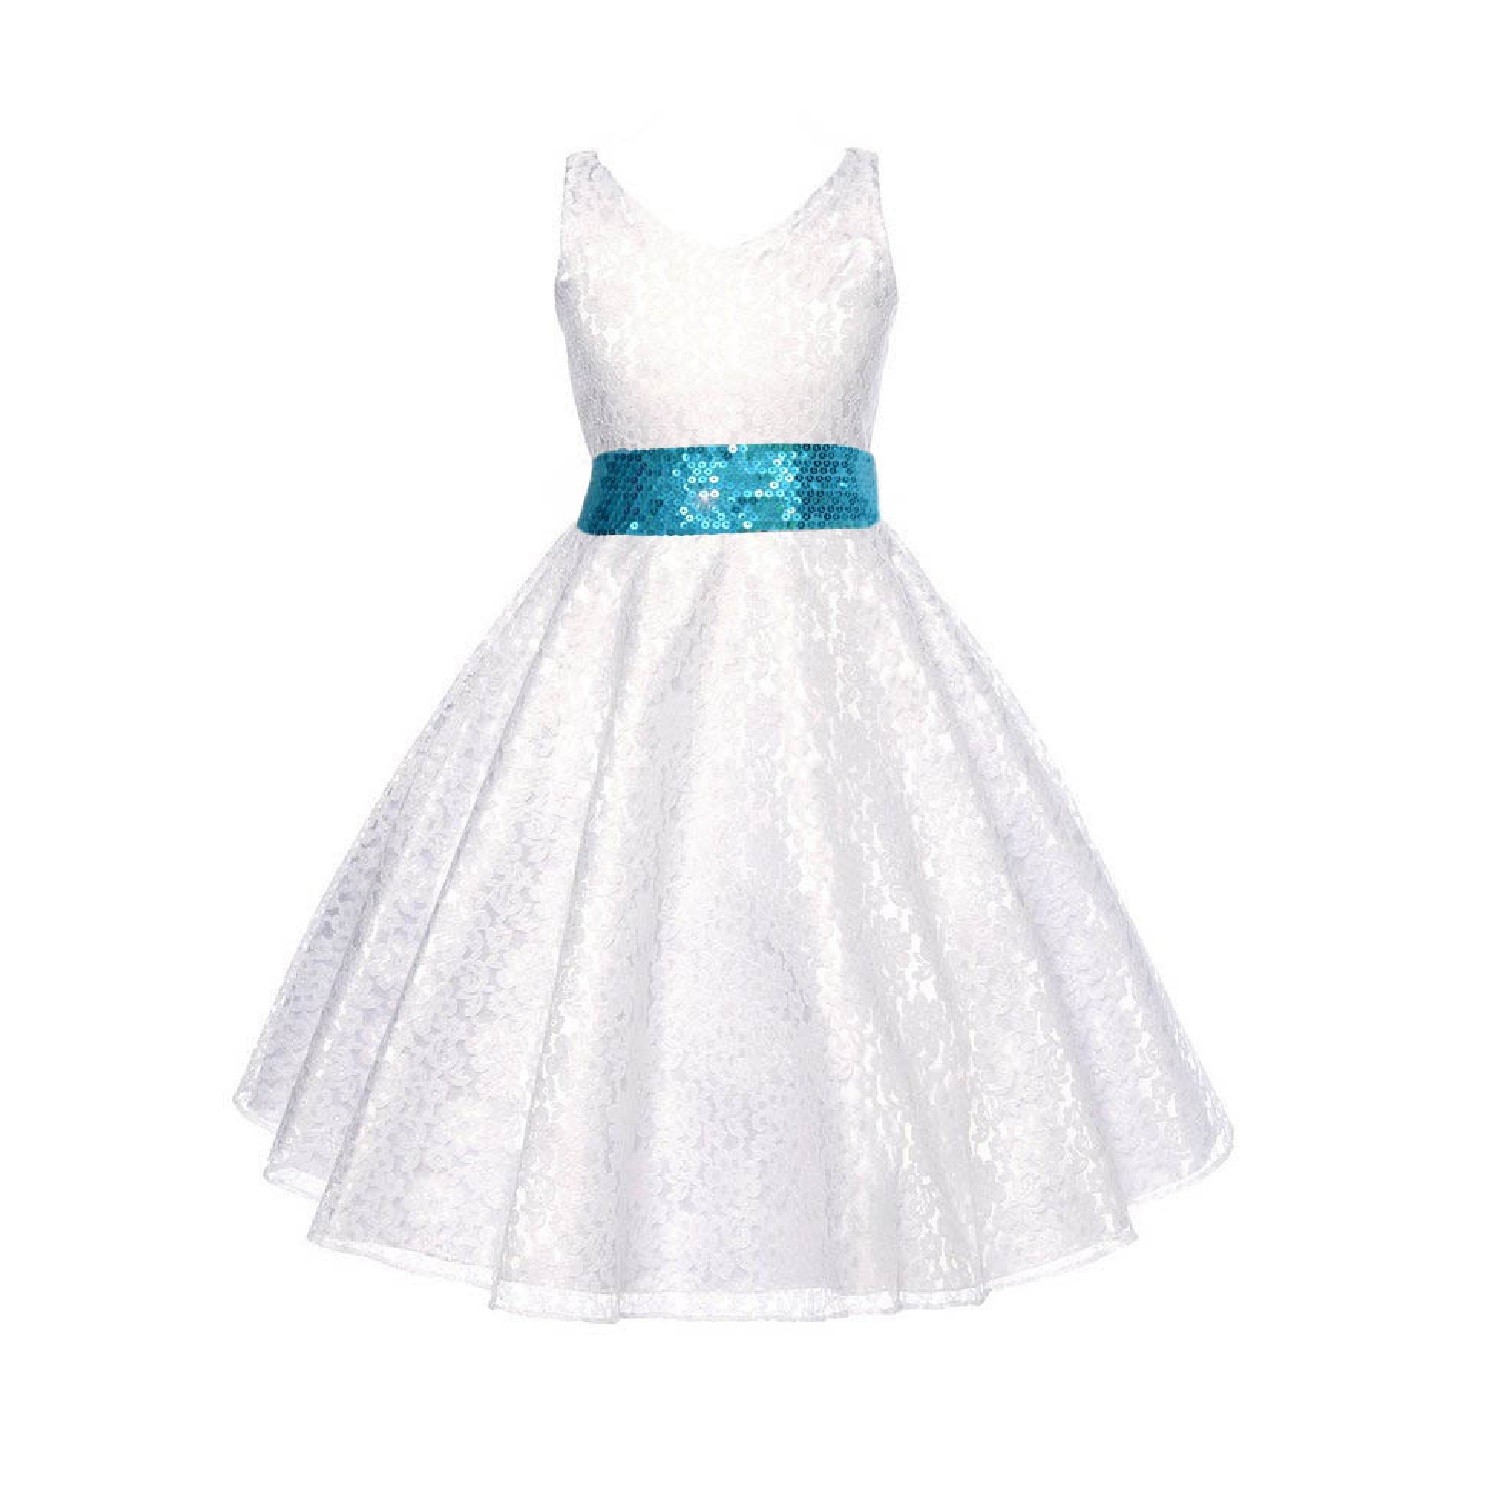 White Floral Lace Overlay V-Neck Turquoise Sequin Flower Girl Dress 166mh